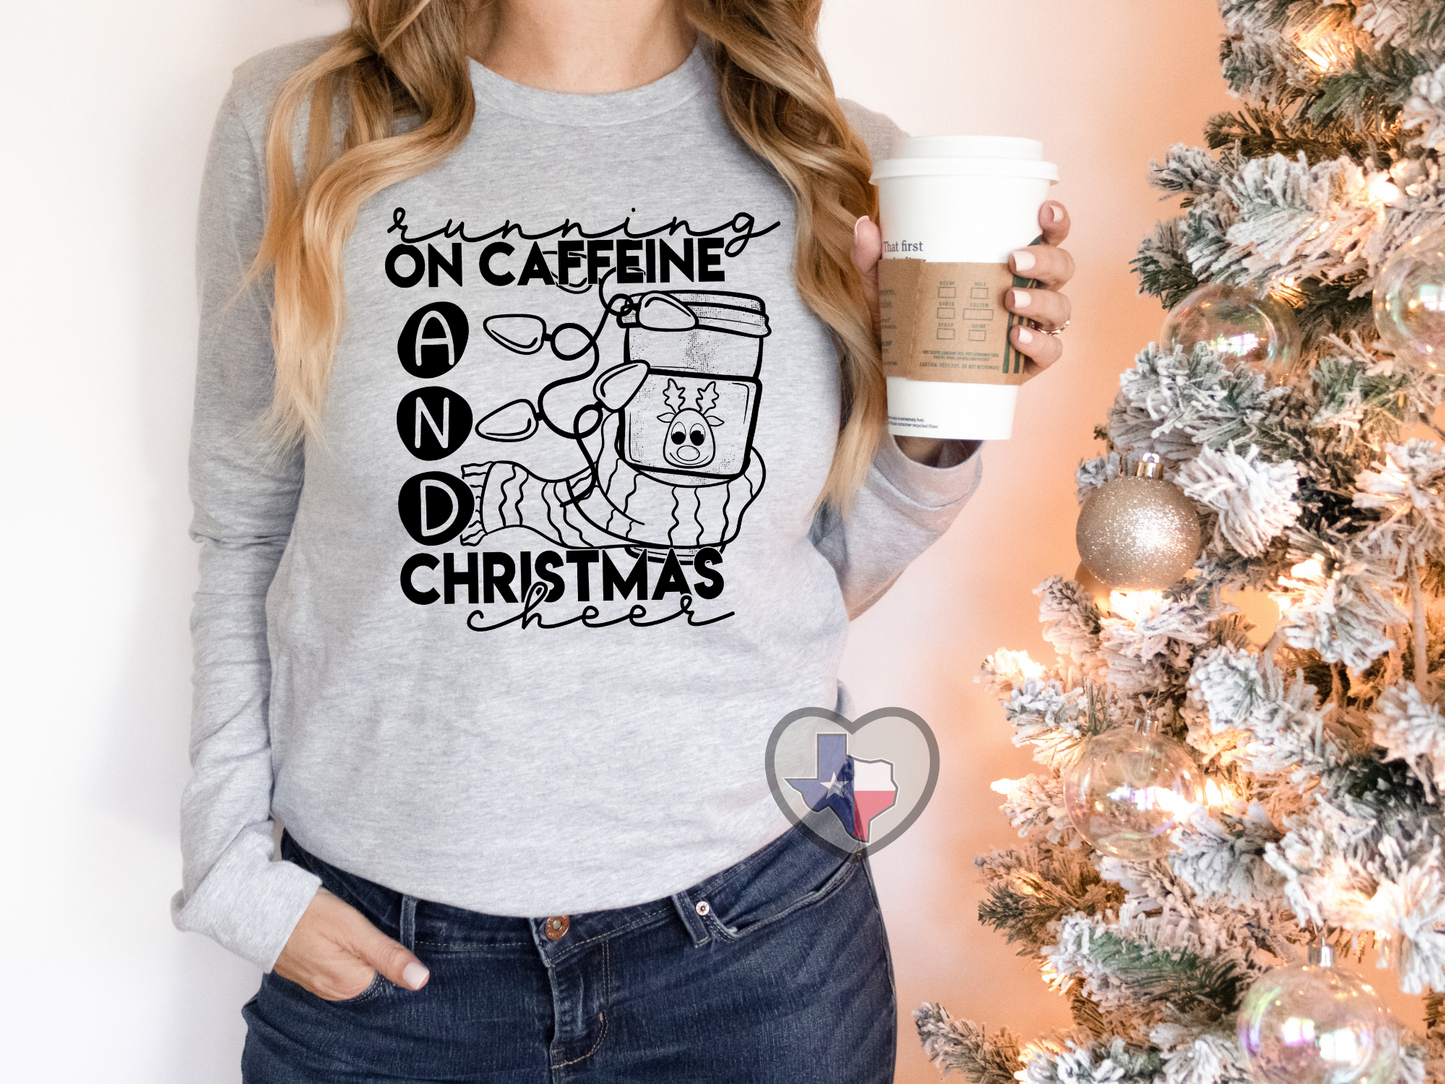 Caffeine and Christmas Cheer